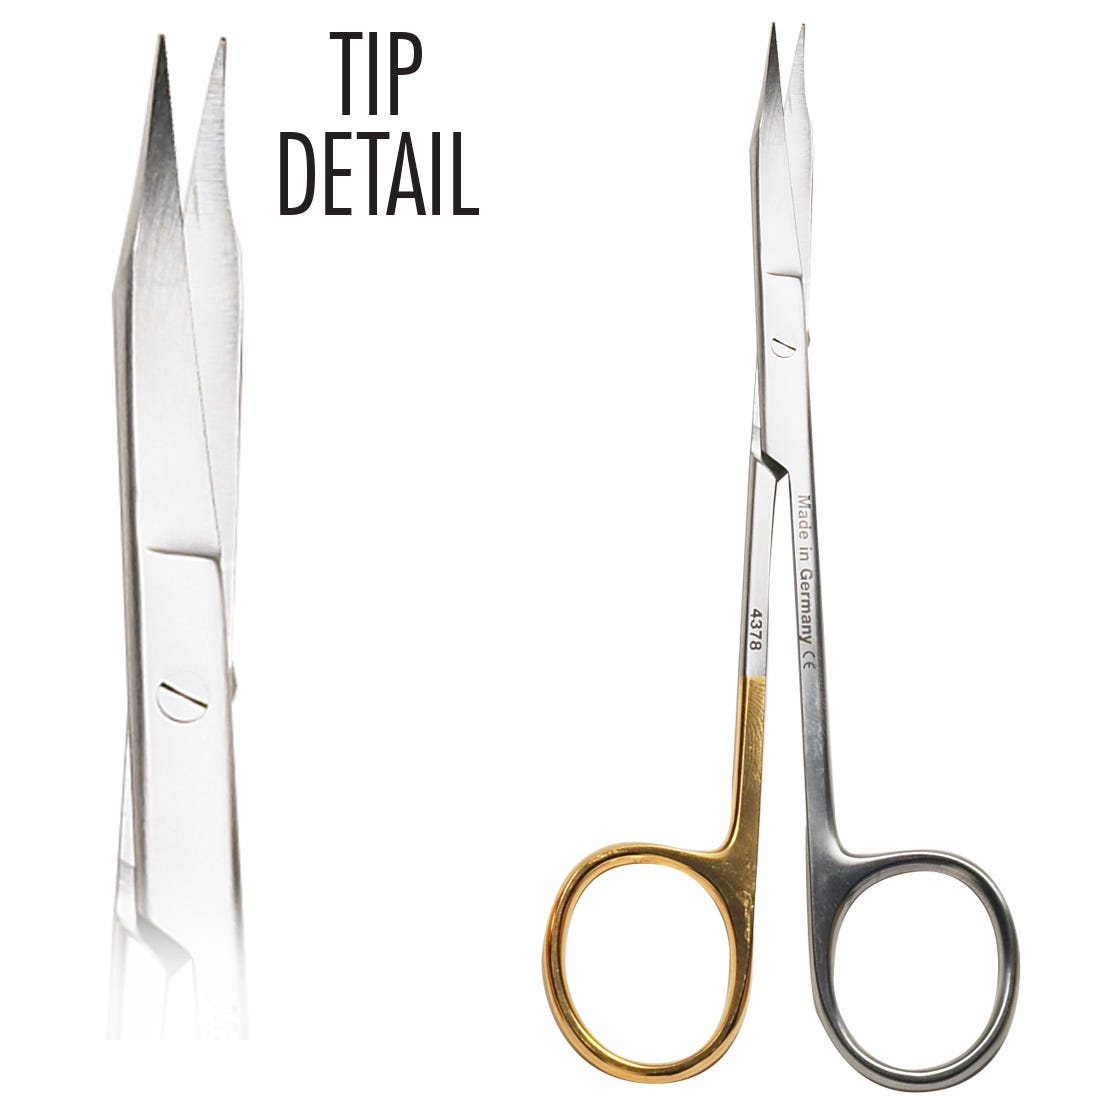 ACE Goldman Fox Scissors, S shaped, super cut tips